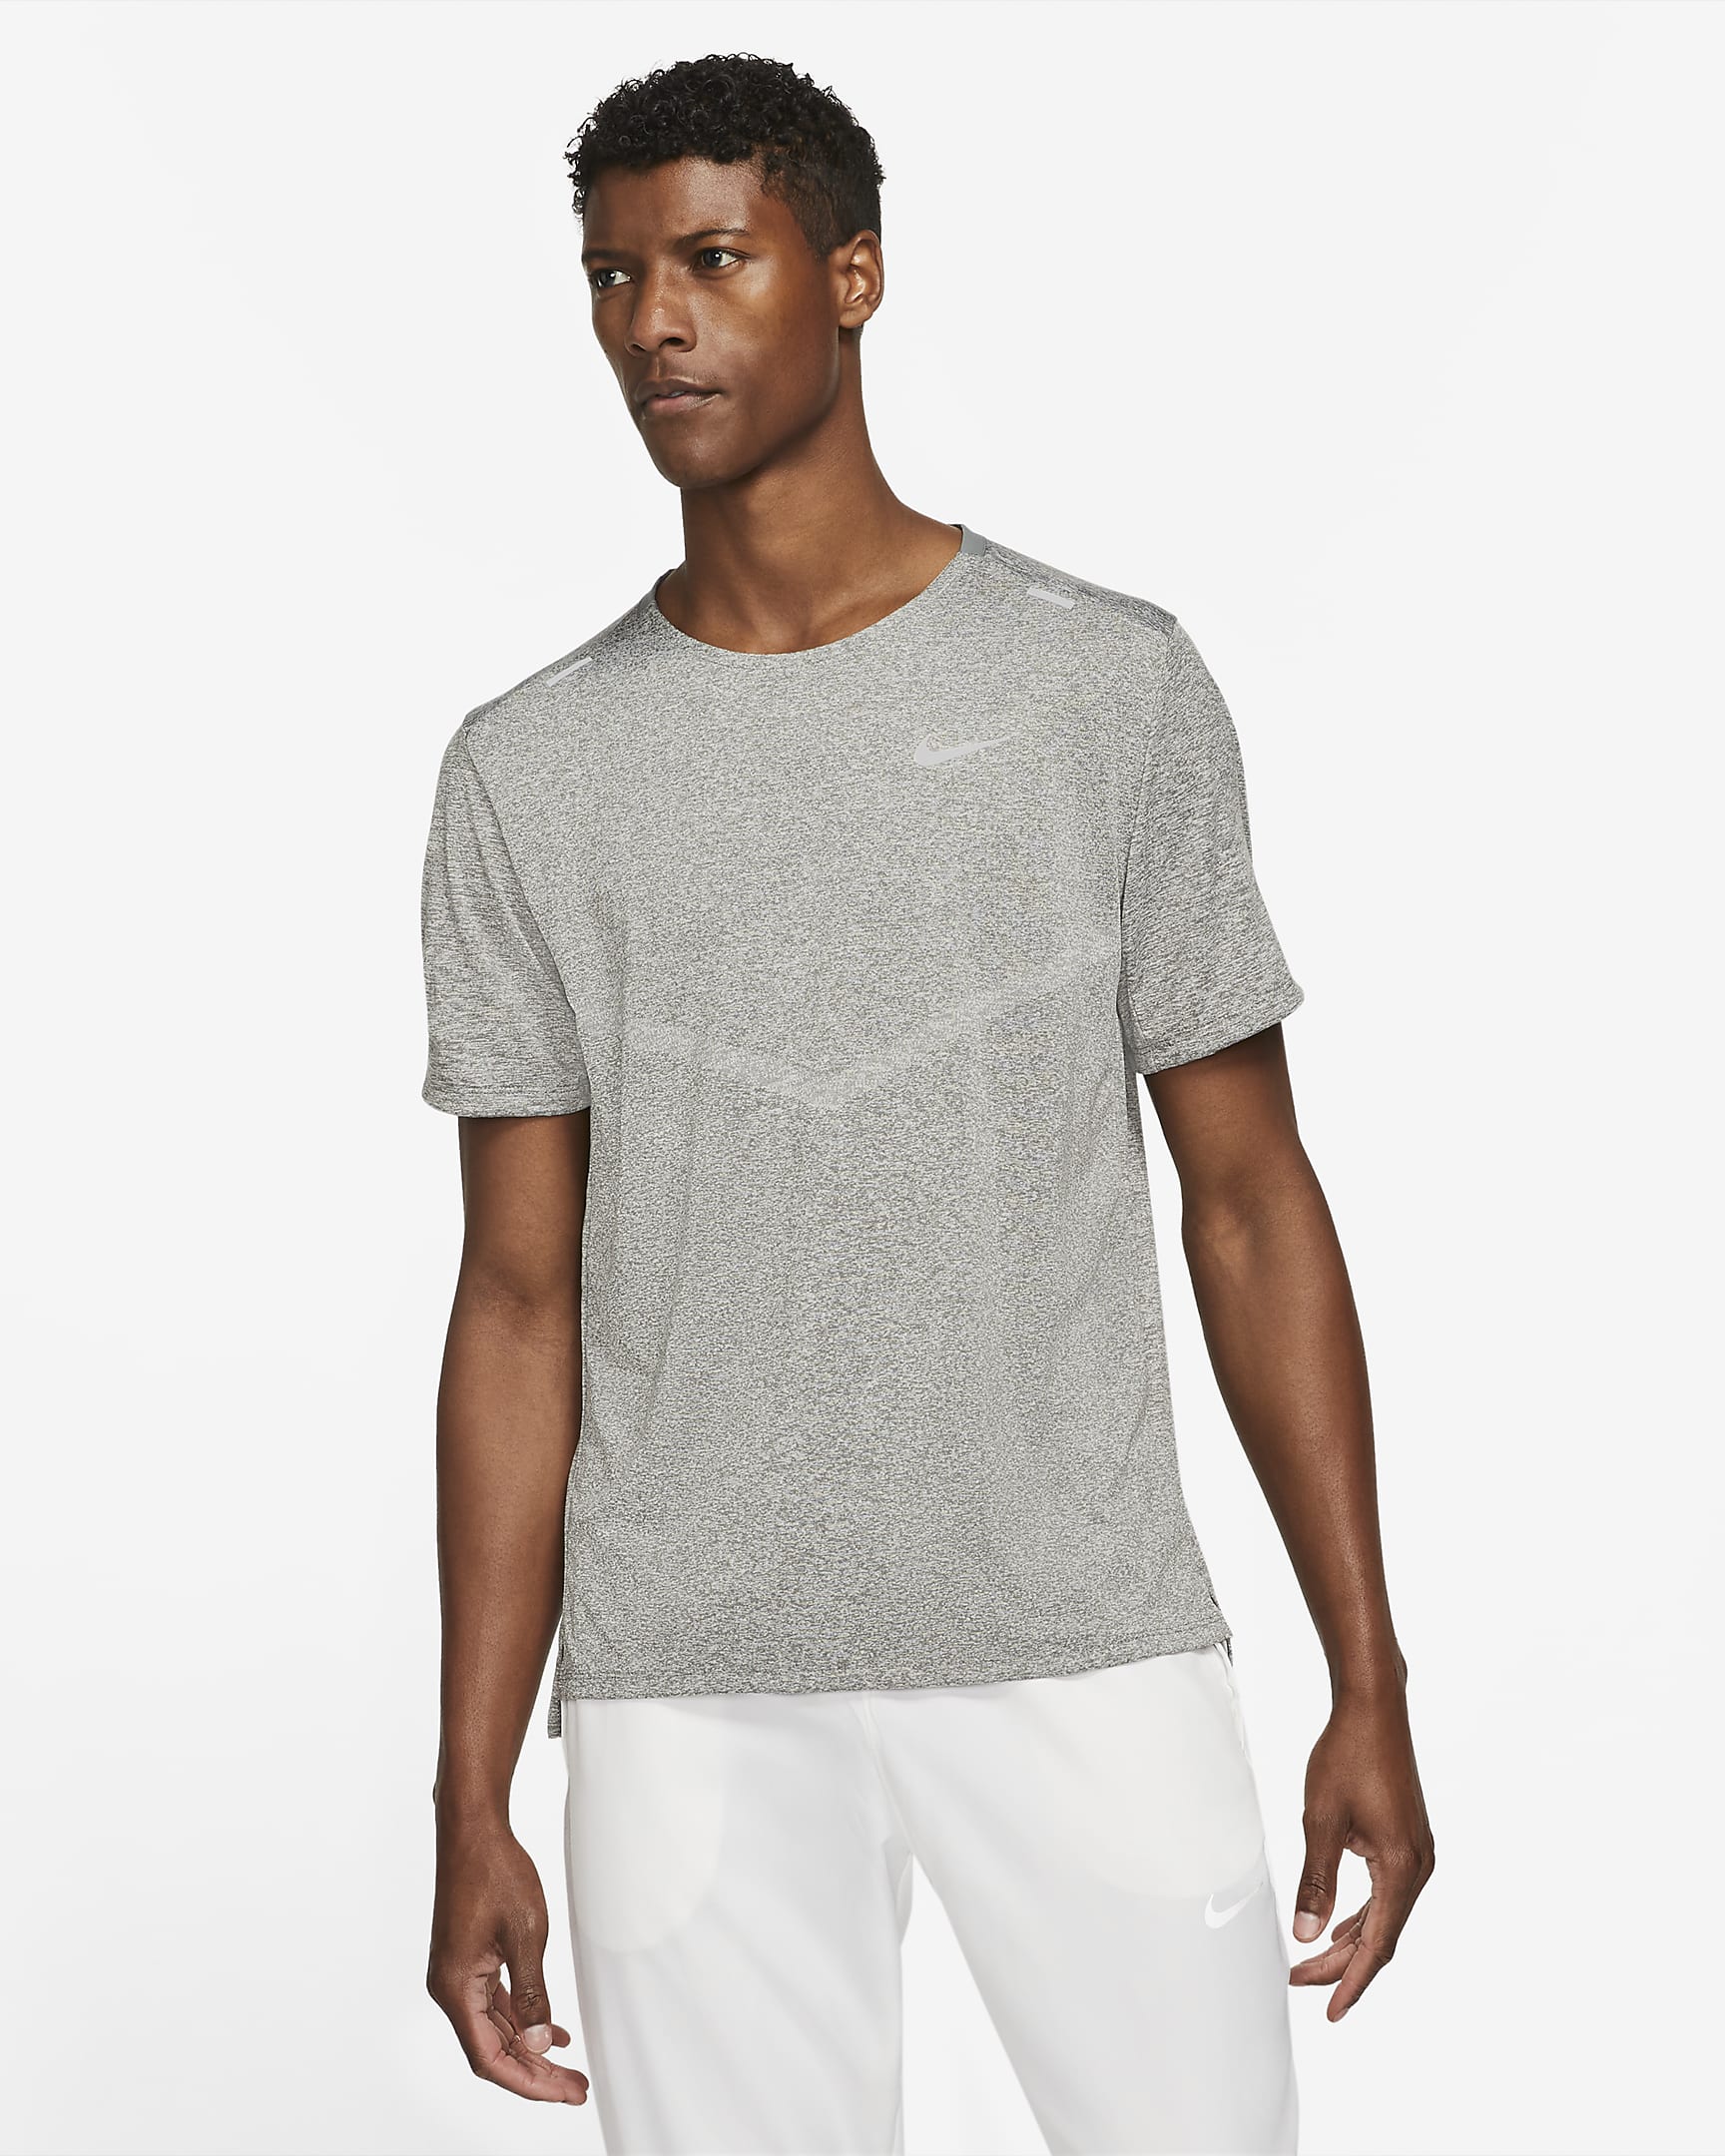 Nike Rise 365 Men's Dri-FIT Short-Sleeve Running Top - Smoke Grey/Heather